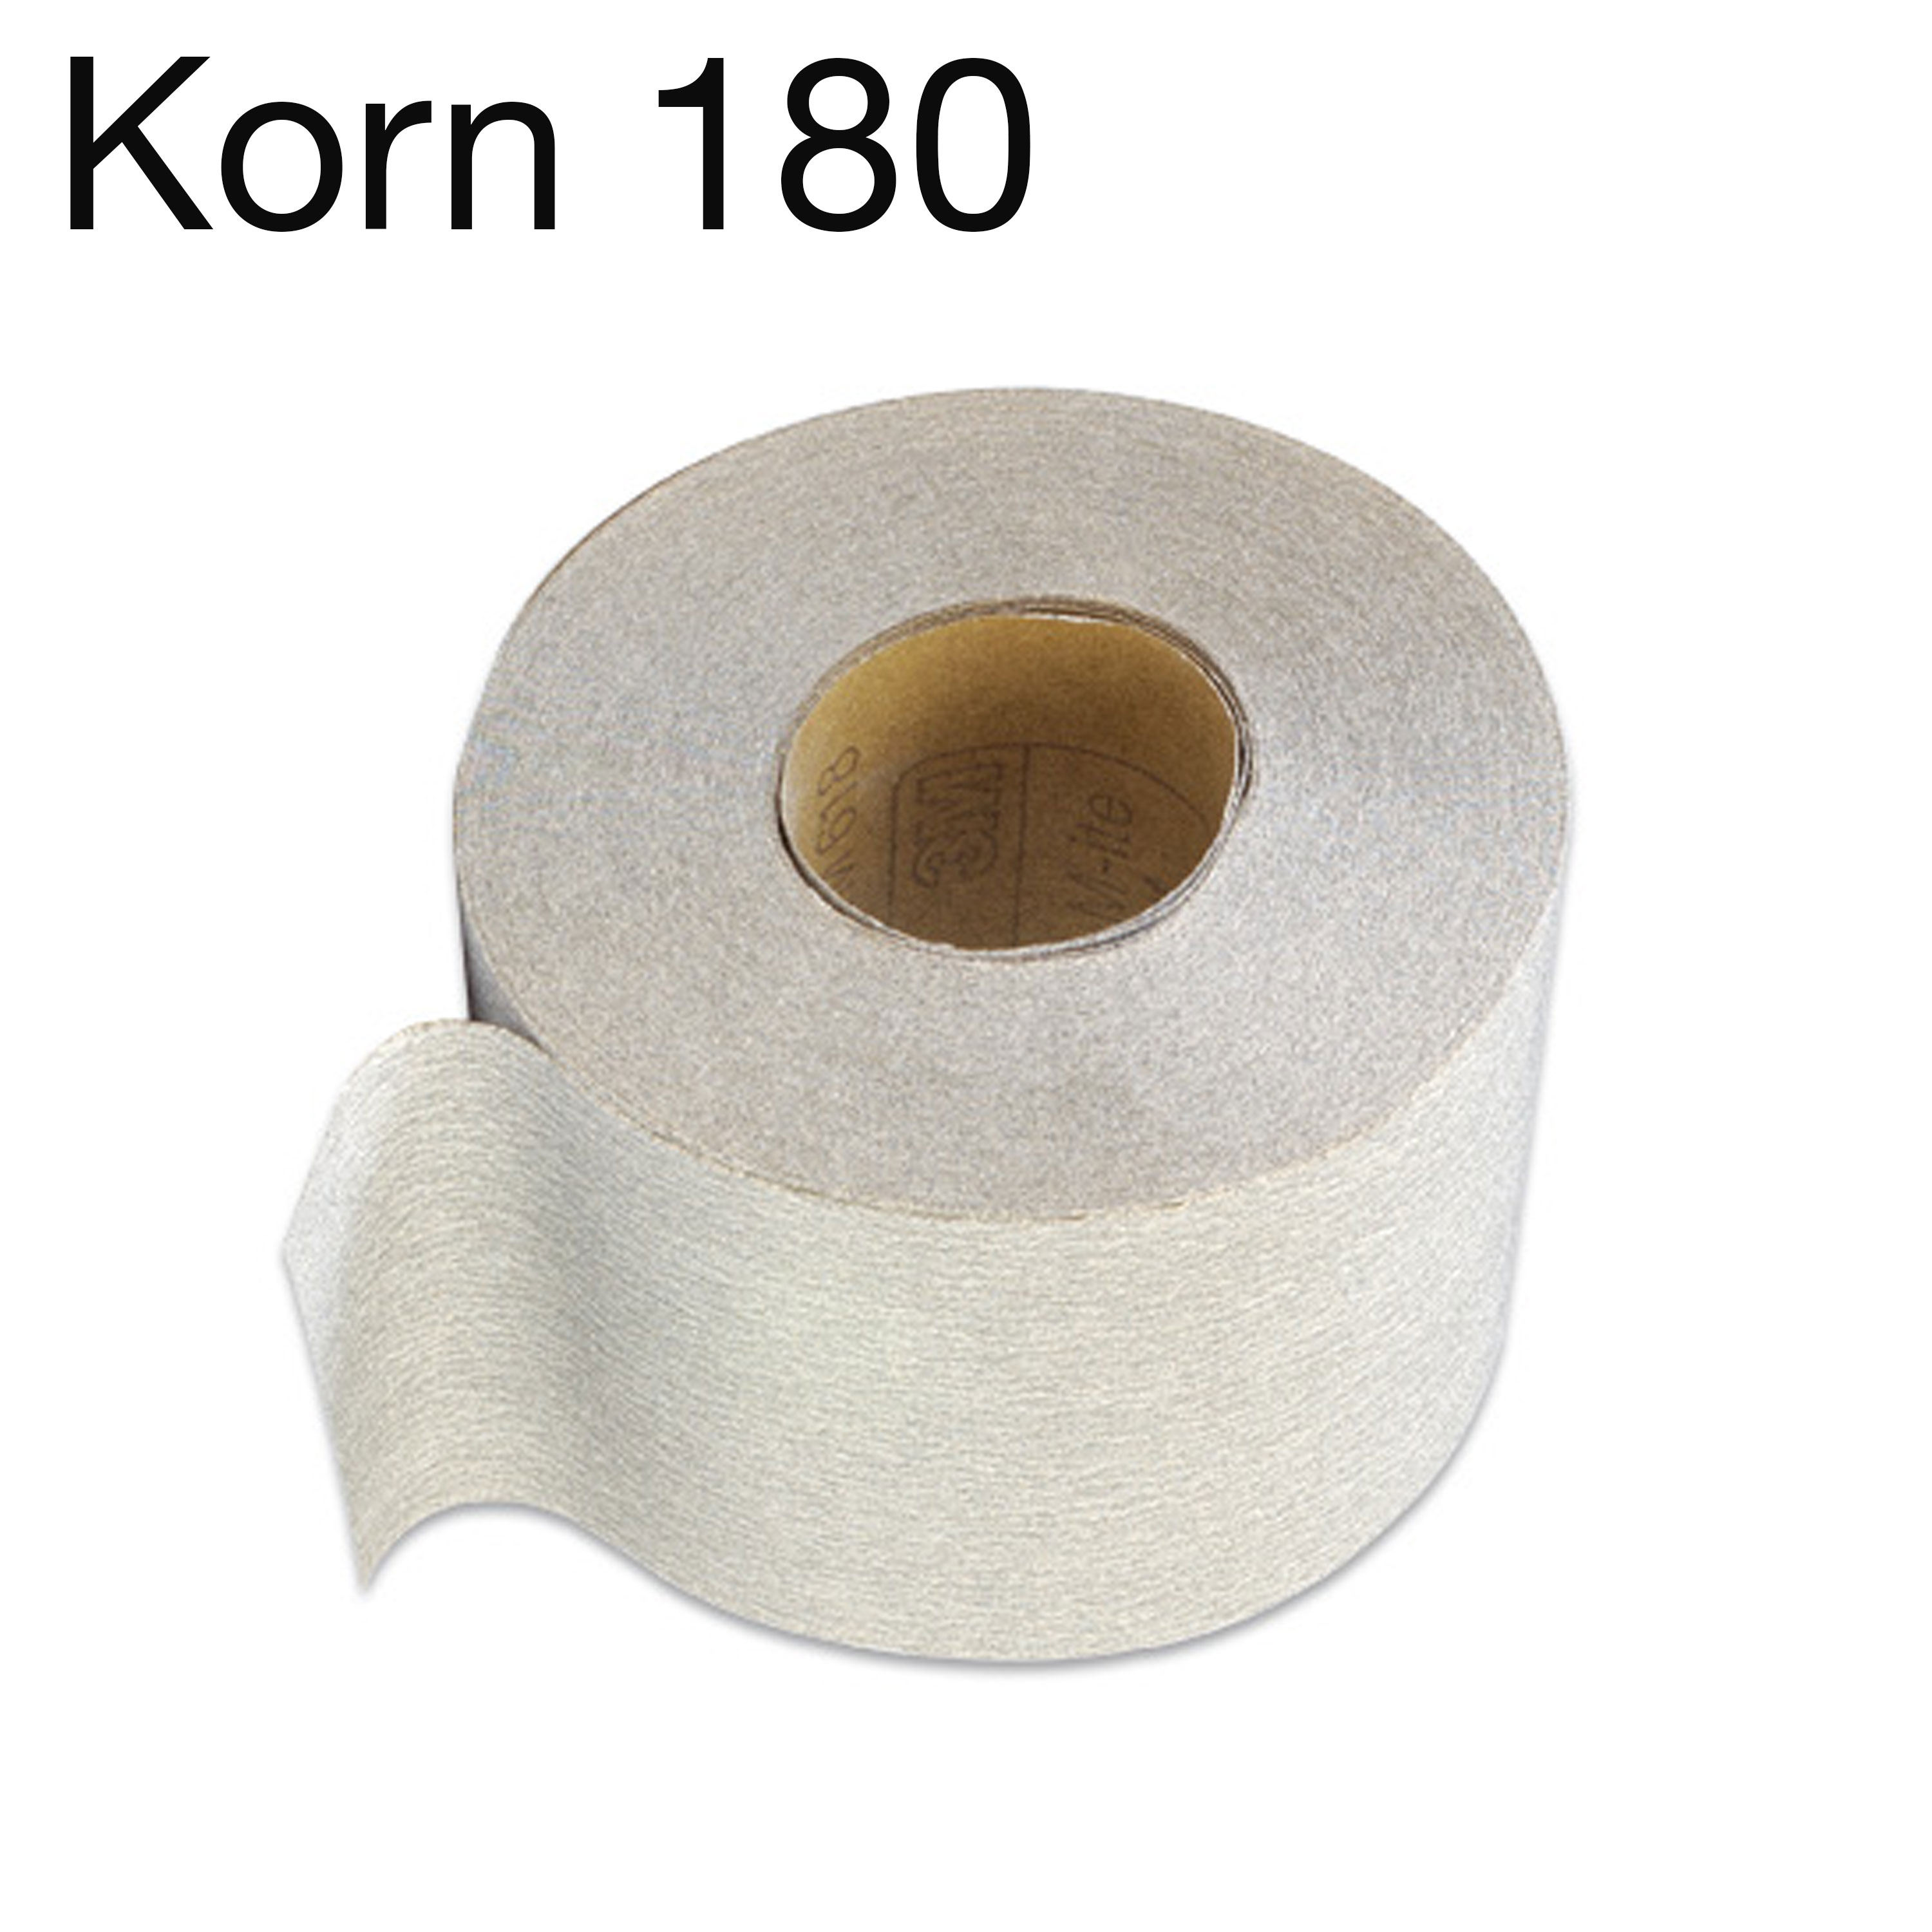 3M 618 04660 Lackschleifpapierrolle, Korn 180, 115mm x 50m